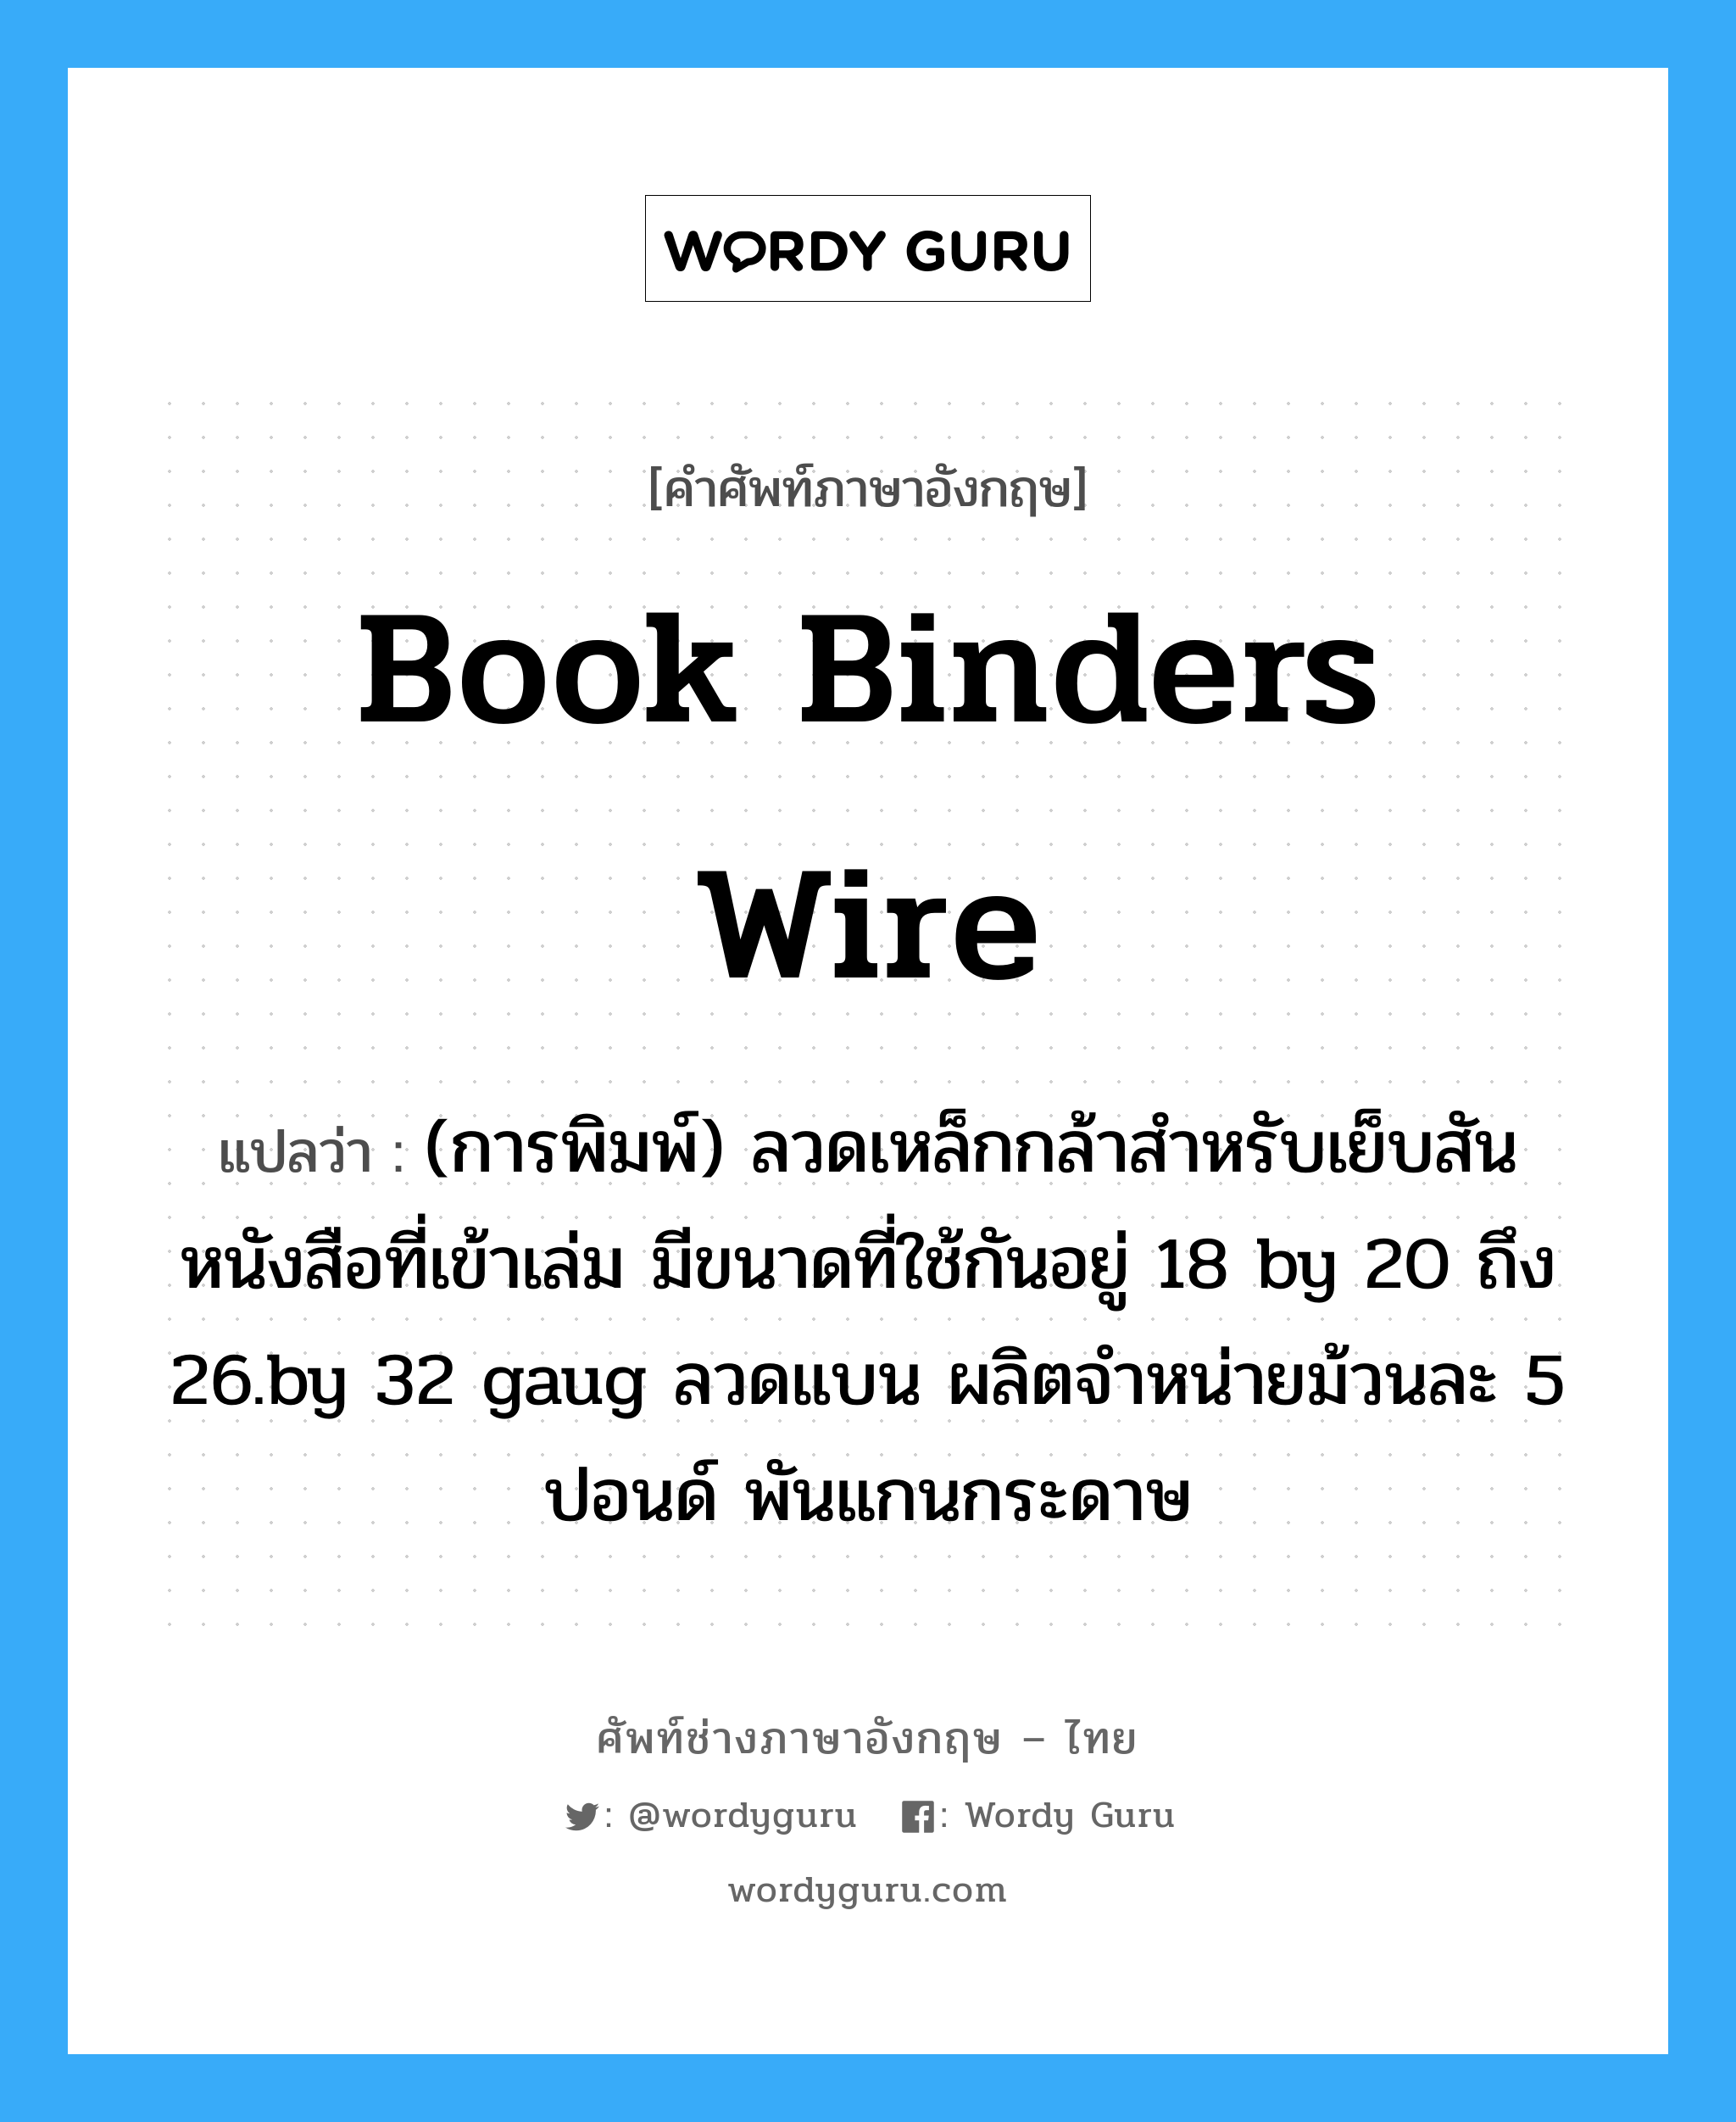 book binders wire แปลว่า?, คำศัพท์ช่างภาษาอังกฤษ - ไทย book binders wire คำศัพท์ภาษาอังกฤษ book binders wire แปลว่า (การพิมพ์) ลวดเหล็กกล้าสำหรับเย็บสันหนังสือที่เข้าเล่ม มีขนาดที่ใช้กันอยู่ 18 by 20 ถึง 26.by 32 gaug ลวดแบน ผลิตจำหน่ายม้วนละ 5 ปอนด์ พันแกนกระดาษ